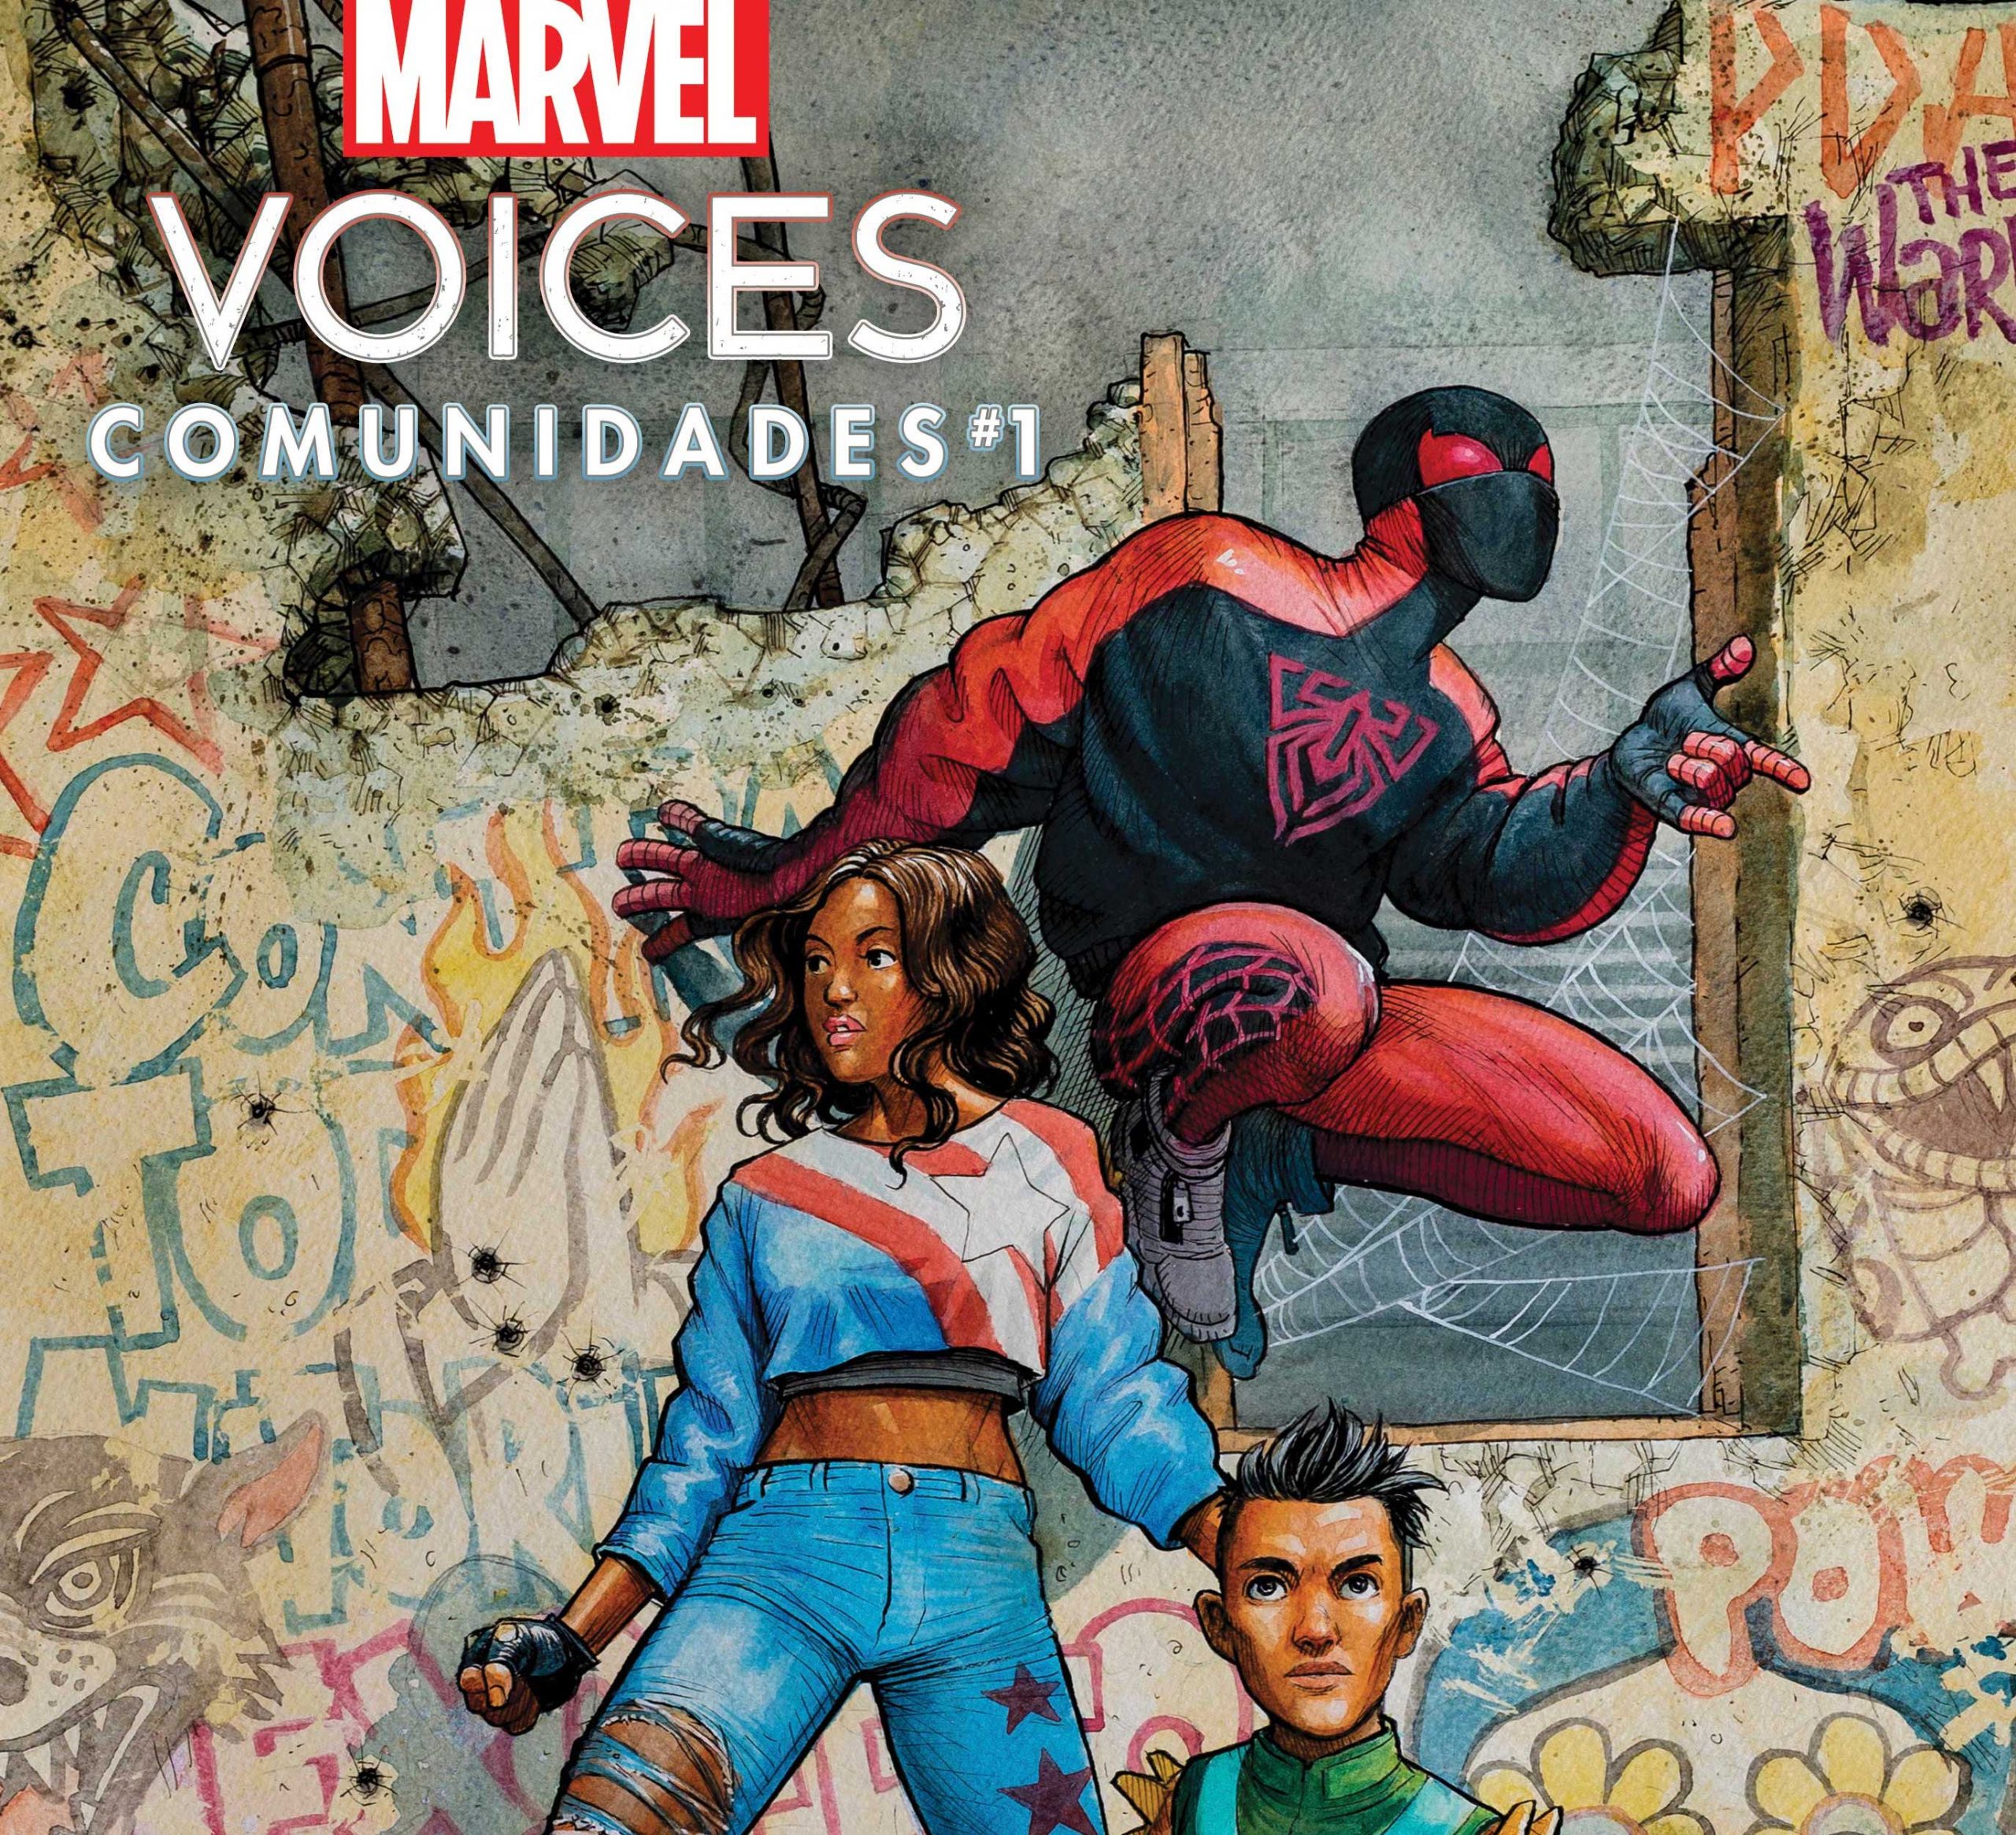 'Marvel's Voices: Community' #1 celebrates diversity right